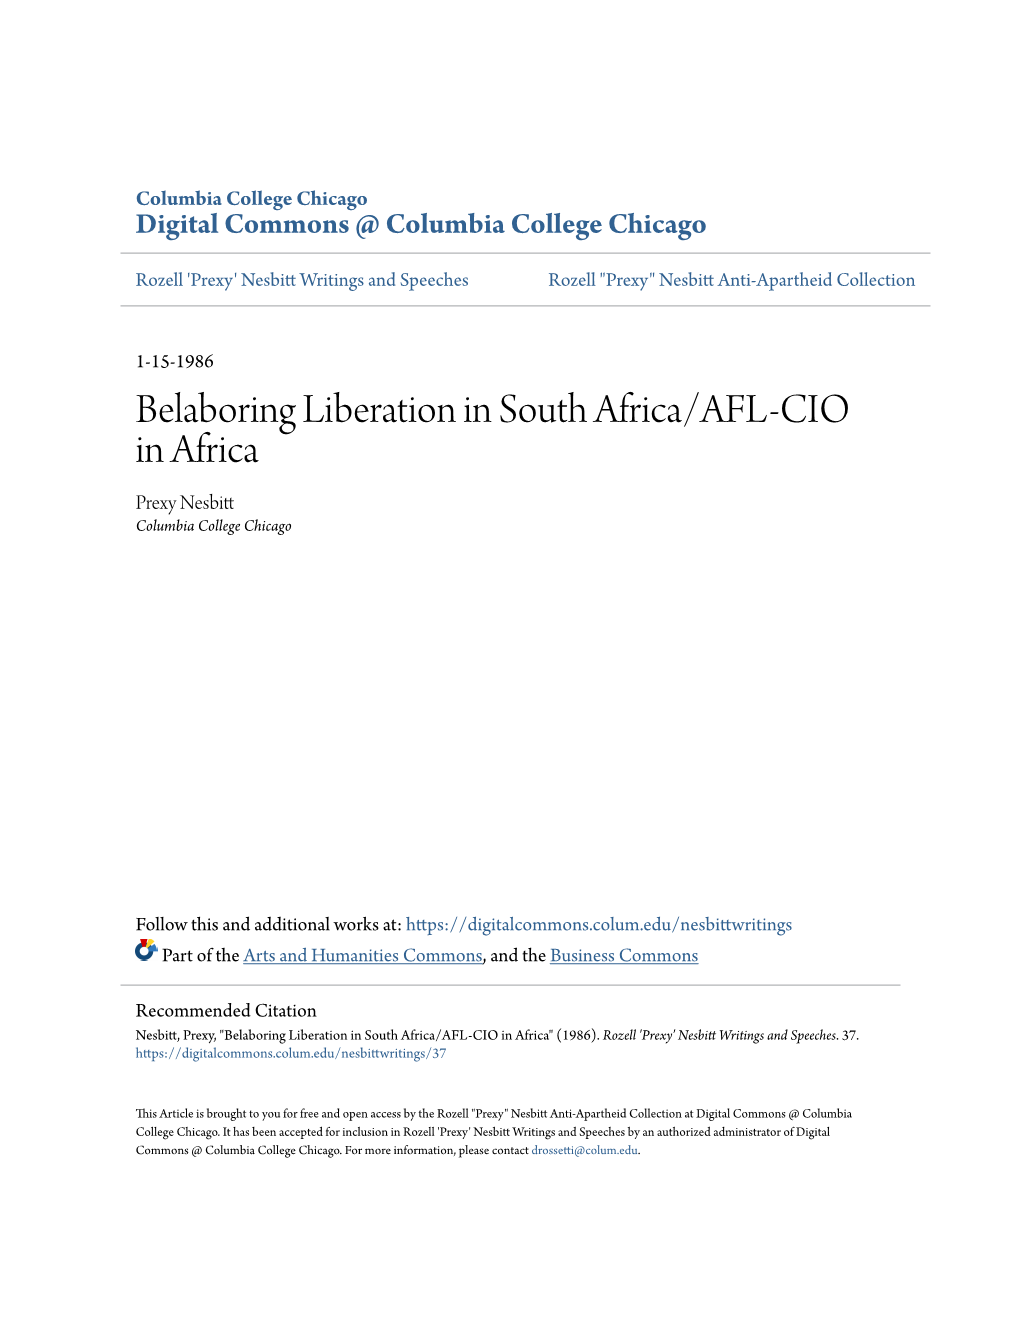 Belaboring Liberation in South Africa/AFL-CIO in Africa Prexy Nesbitt Columbia College Chicago